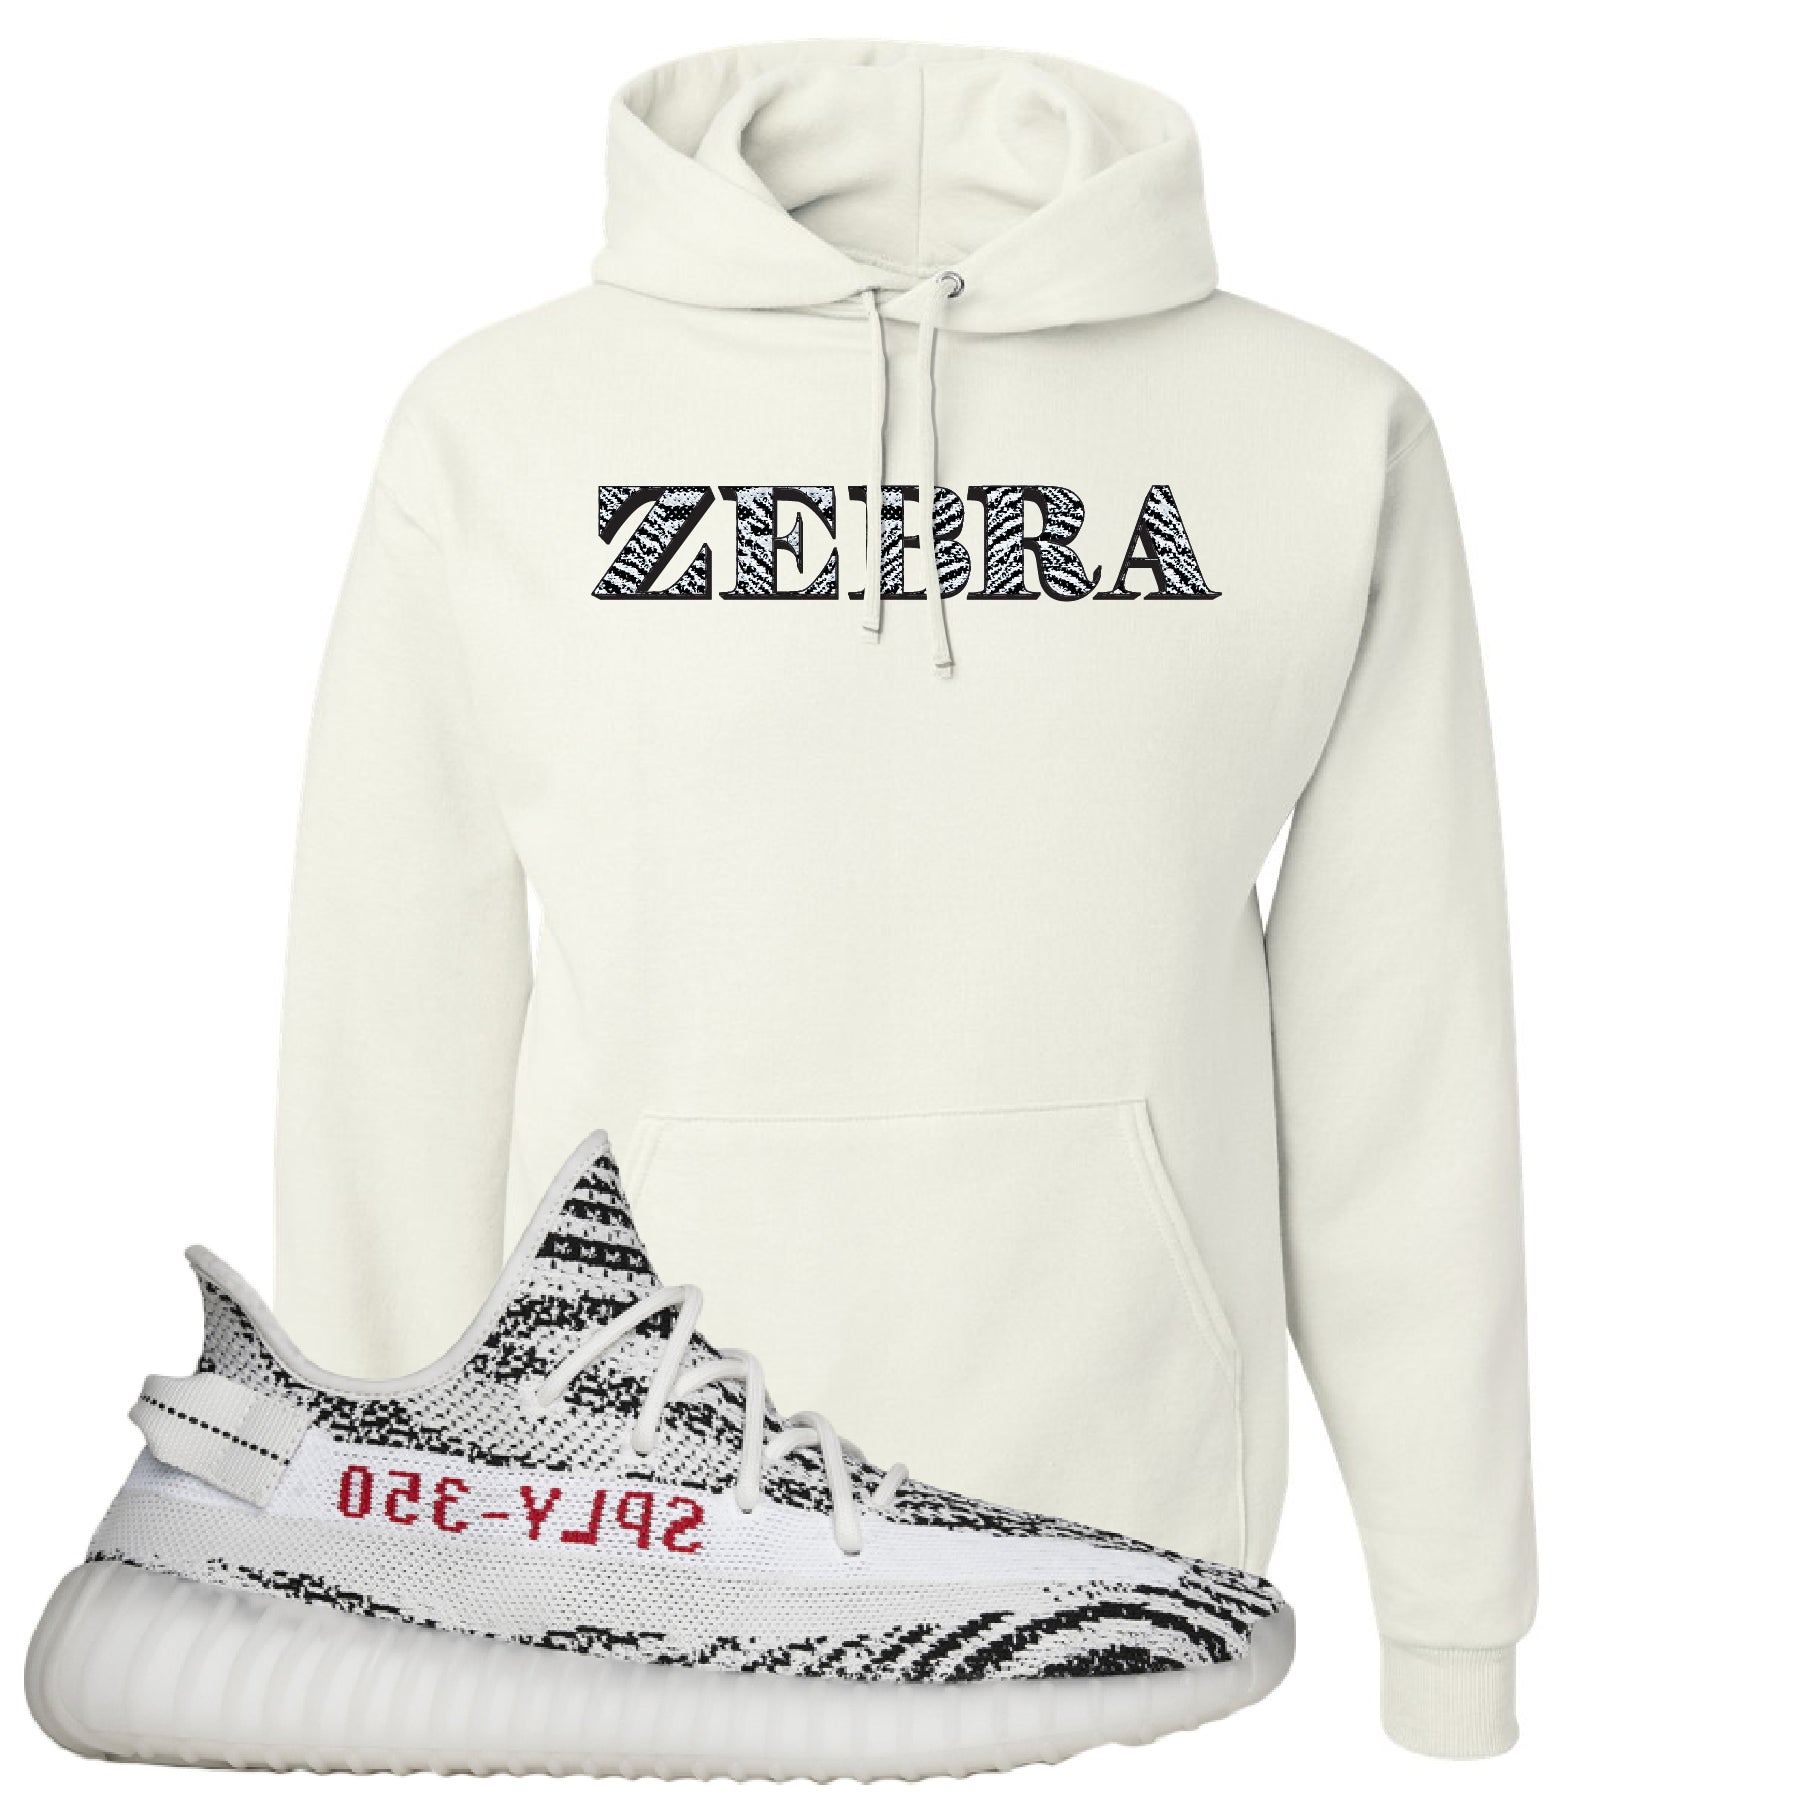 yeezy zebra hoodie